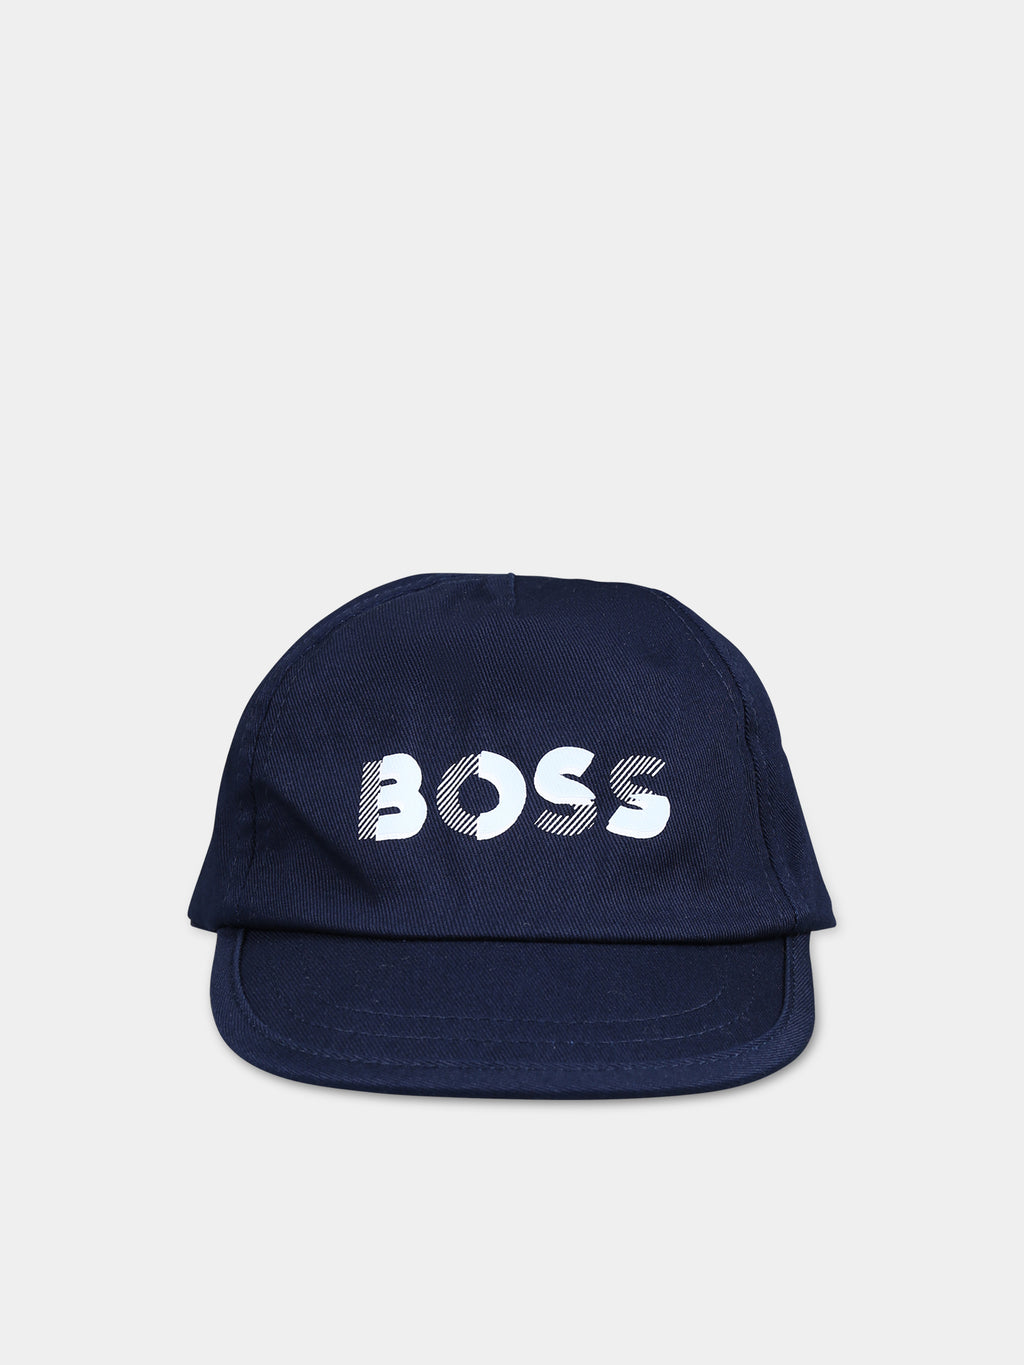 Blue visor hat for baby boy